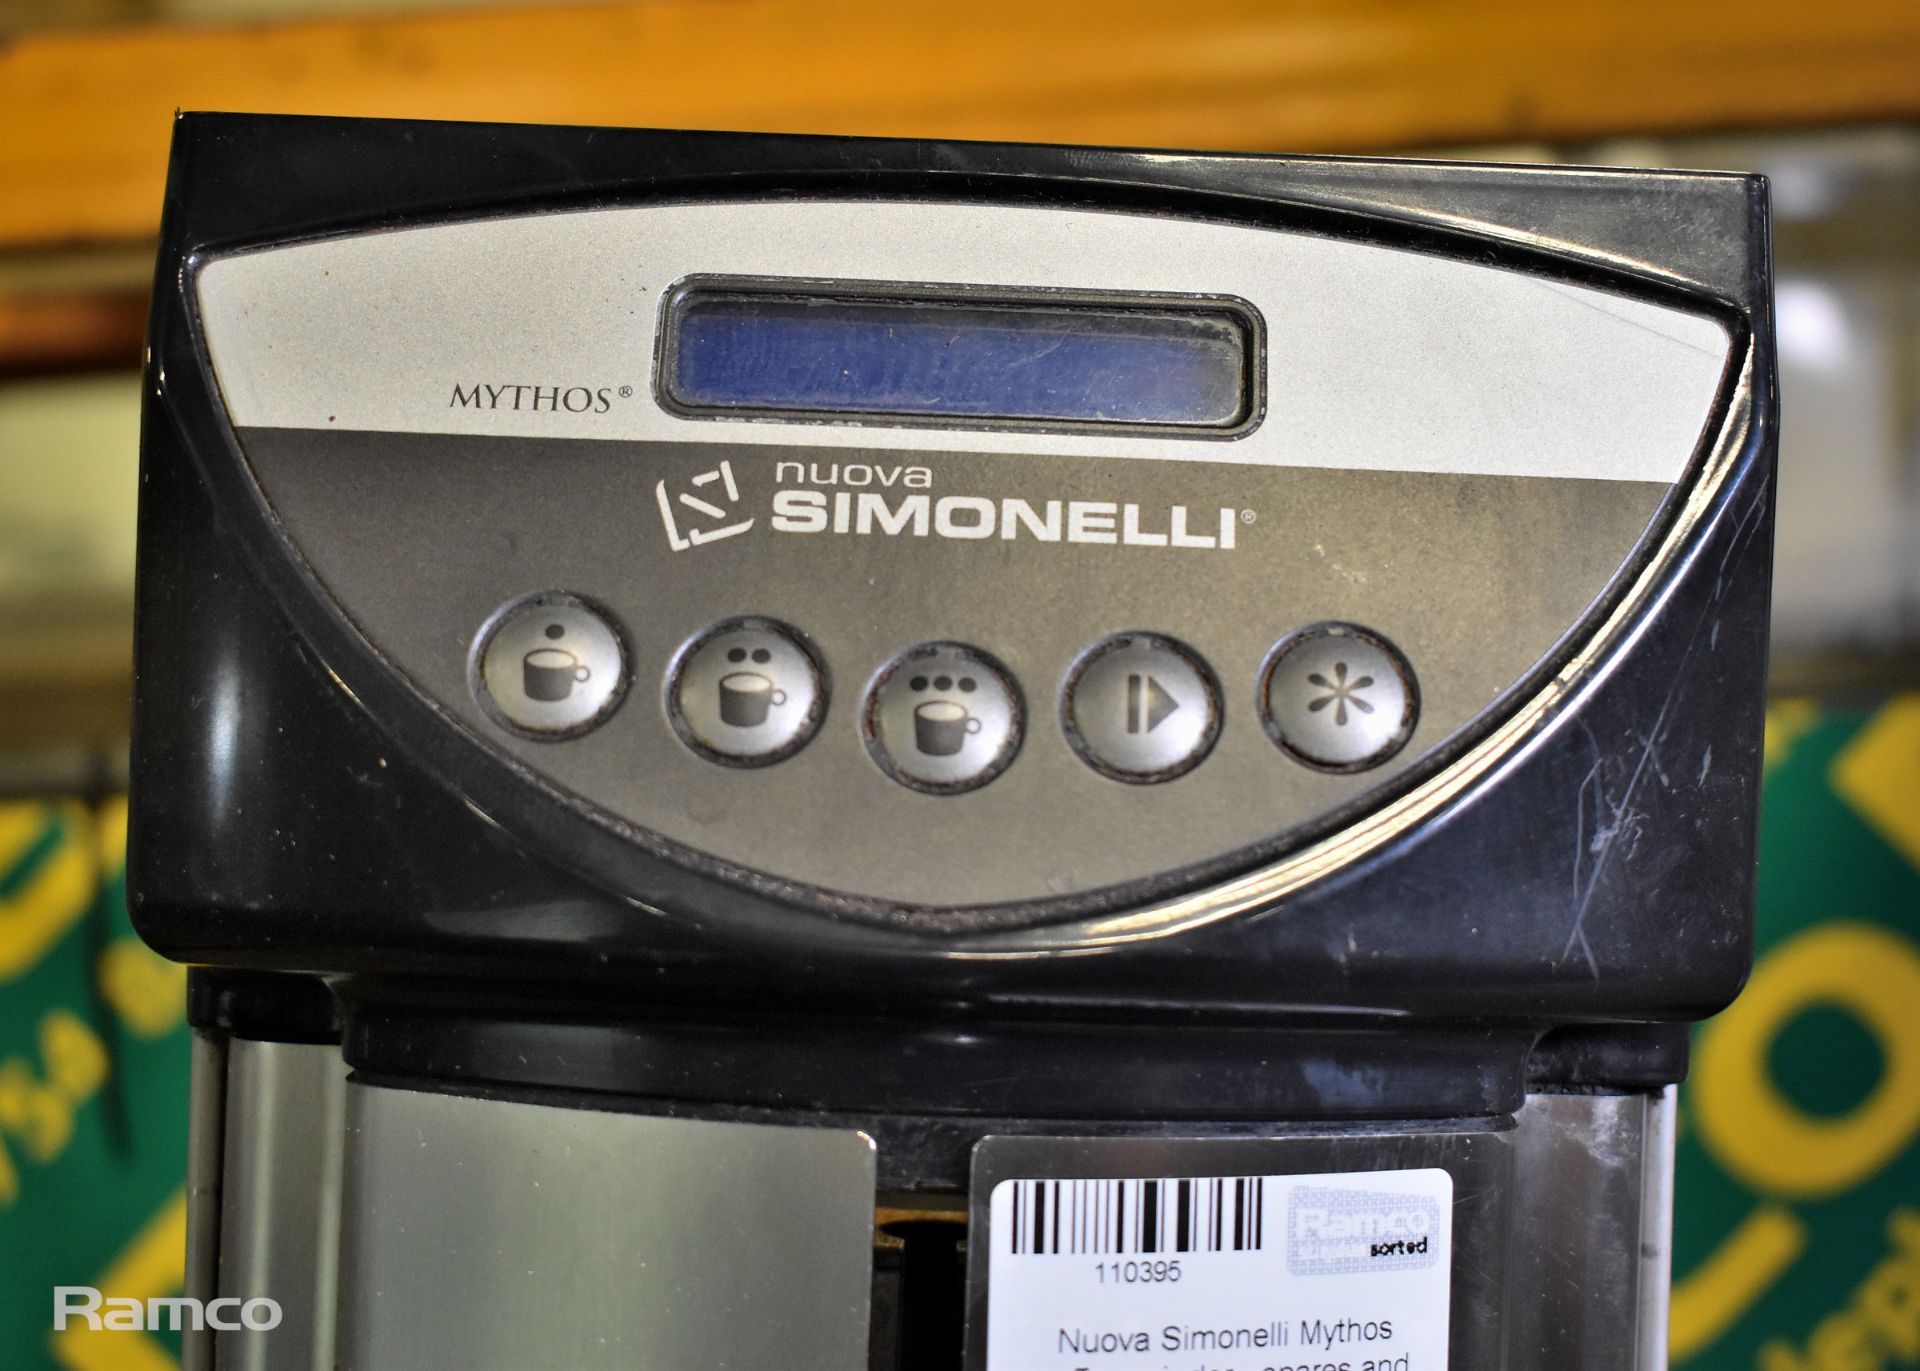 Nuova Simonelli Mythos coffee grinder - SPARES OR REPAIRS - Image 2 of 6